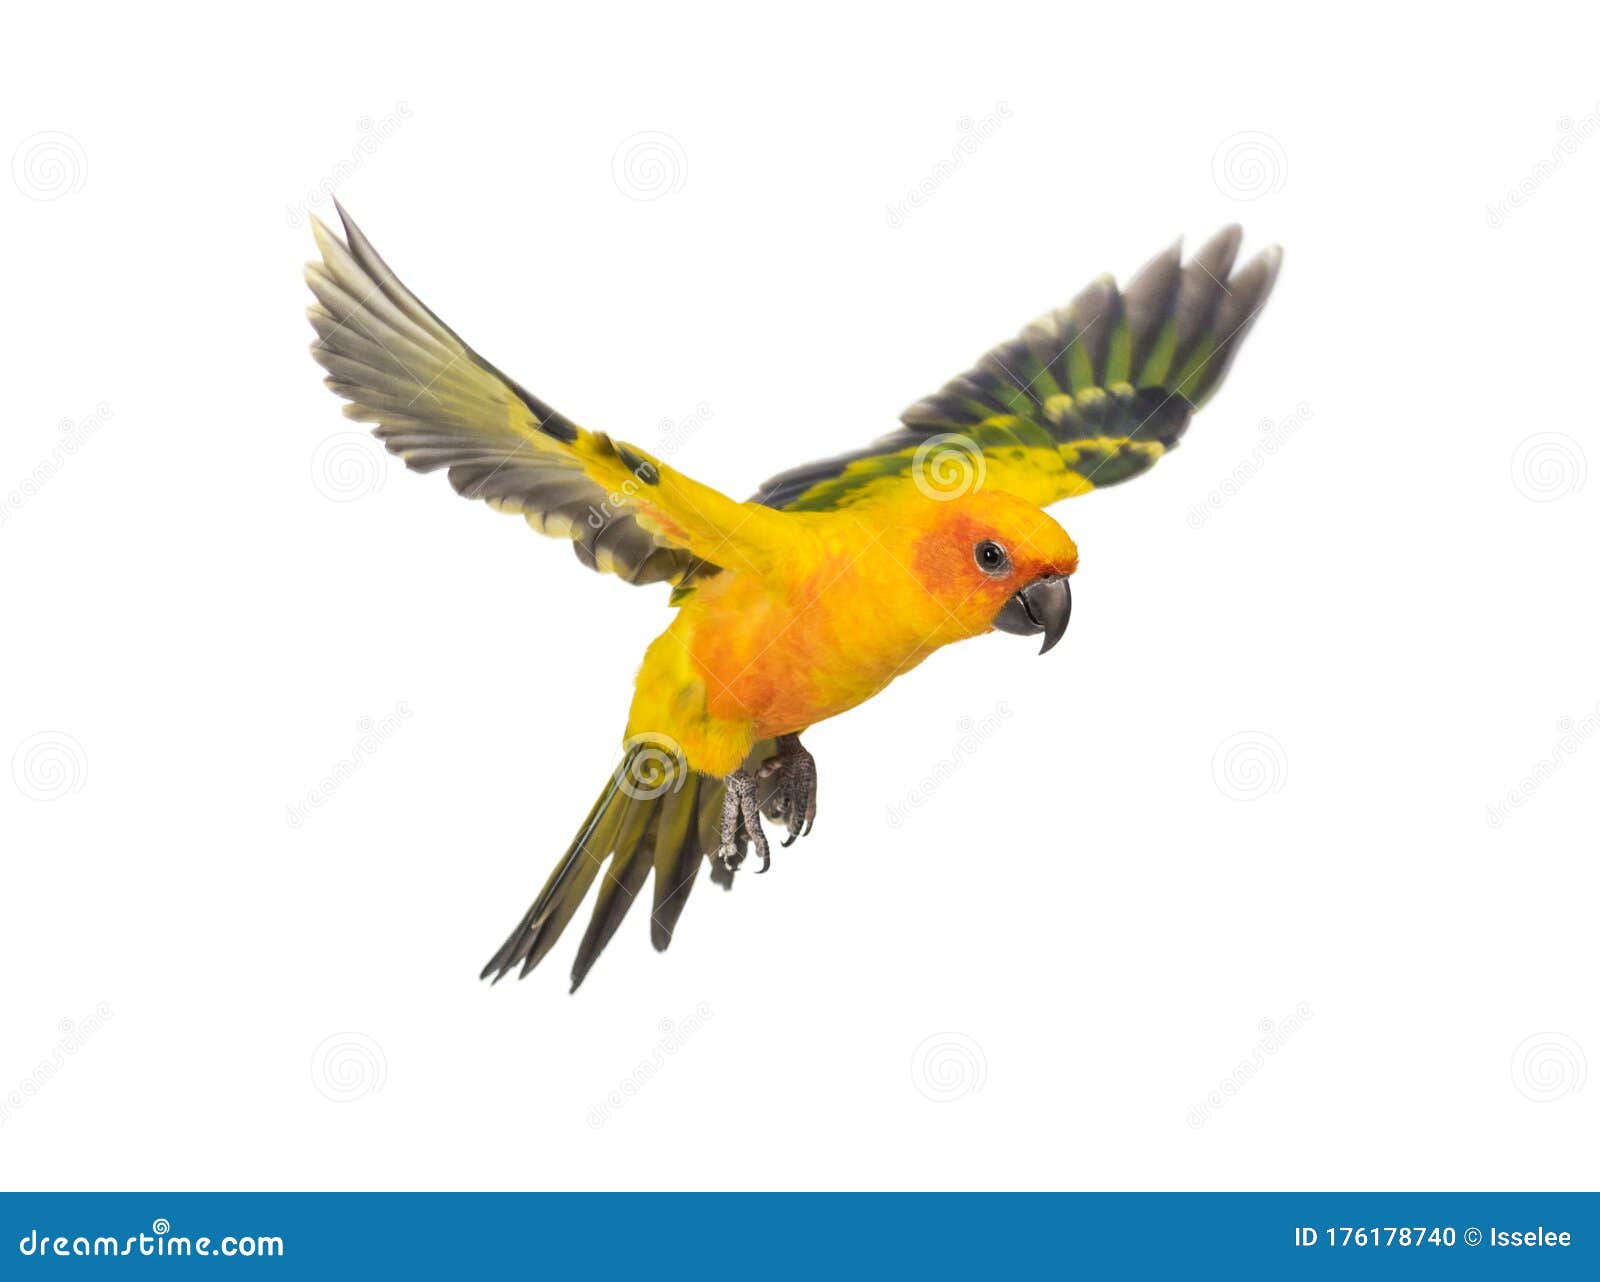 sun parakeet, bird, aratinga solstitialis, flying, 